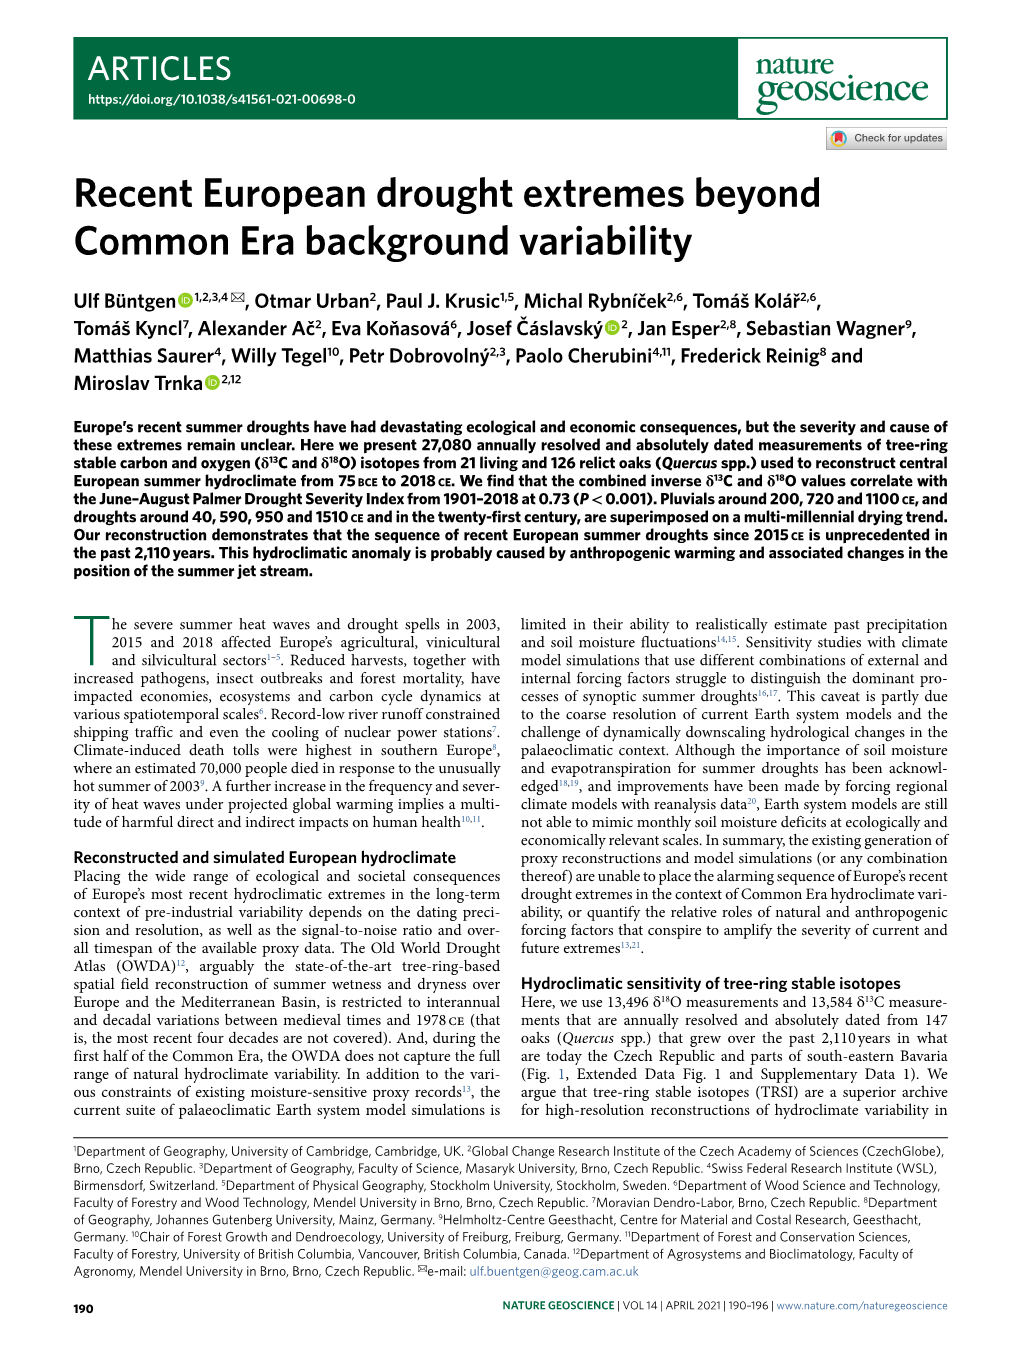 Recent European Drought Extremes Beyond Common Era Background Variability